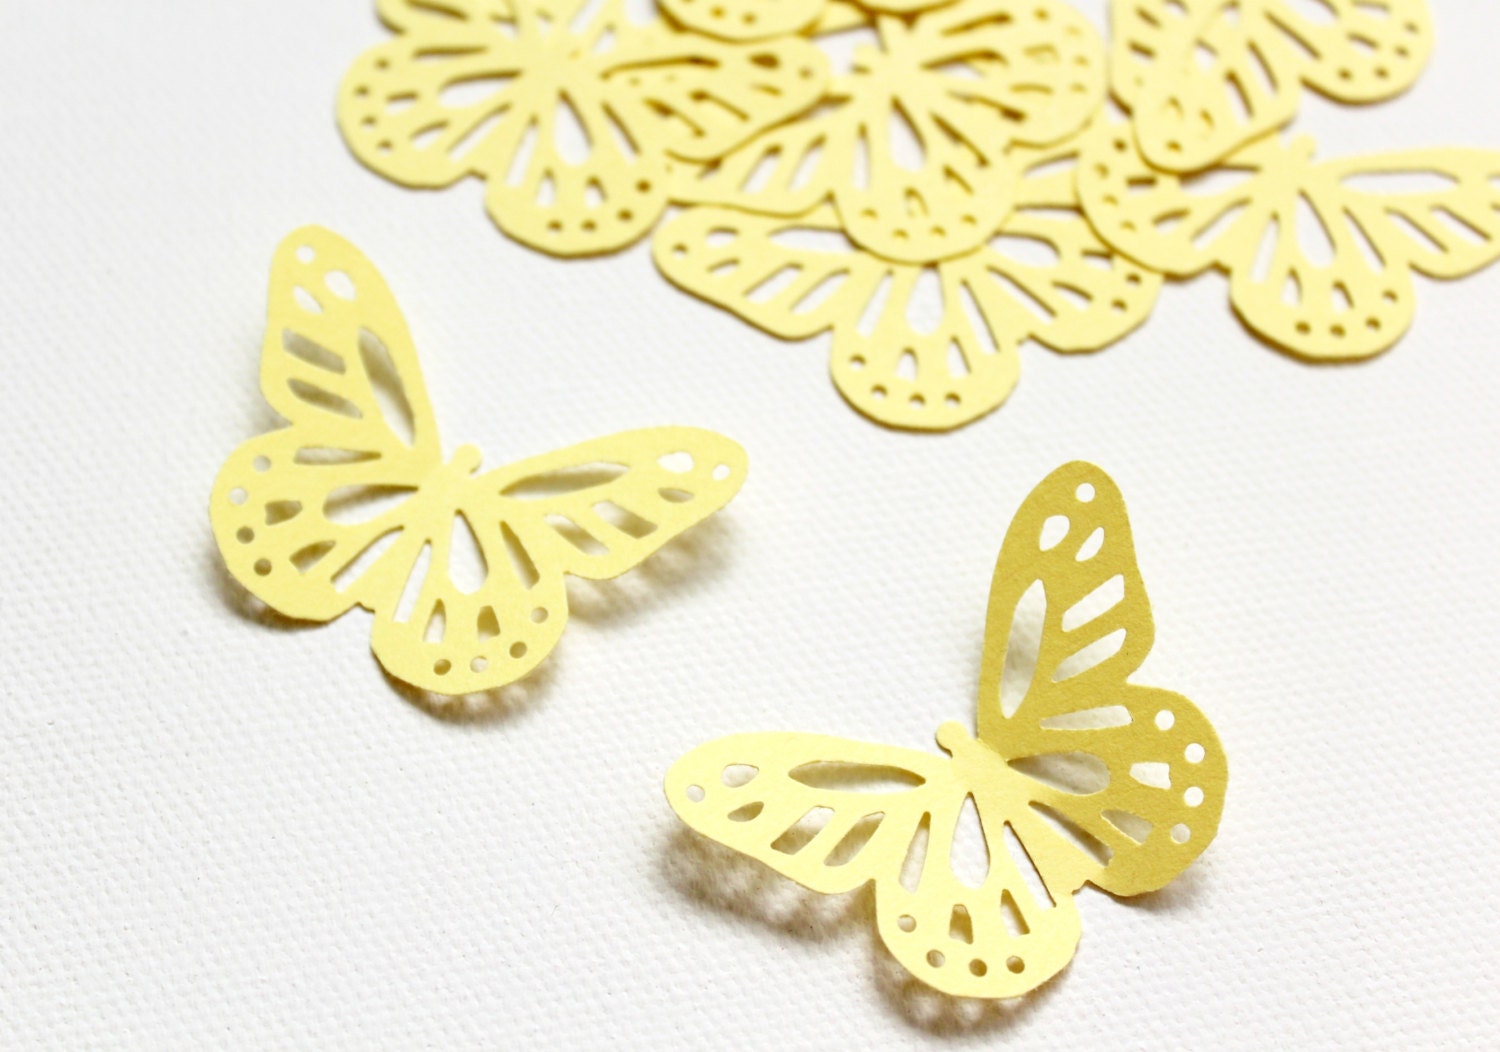 25 Embossed Butterfly Die Cuts in 25 Assorted Cardstock Colors #3 